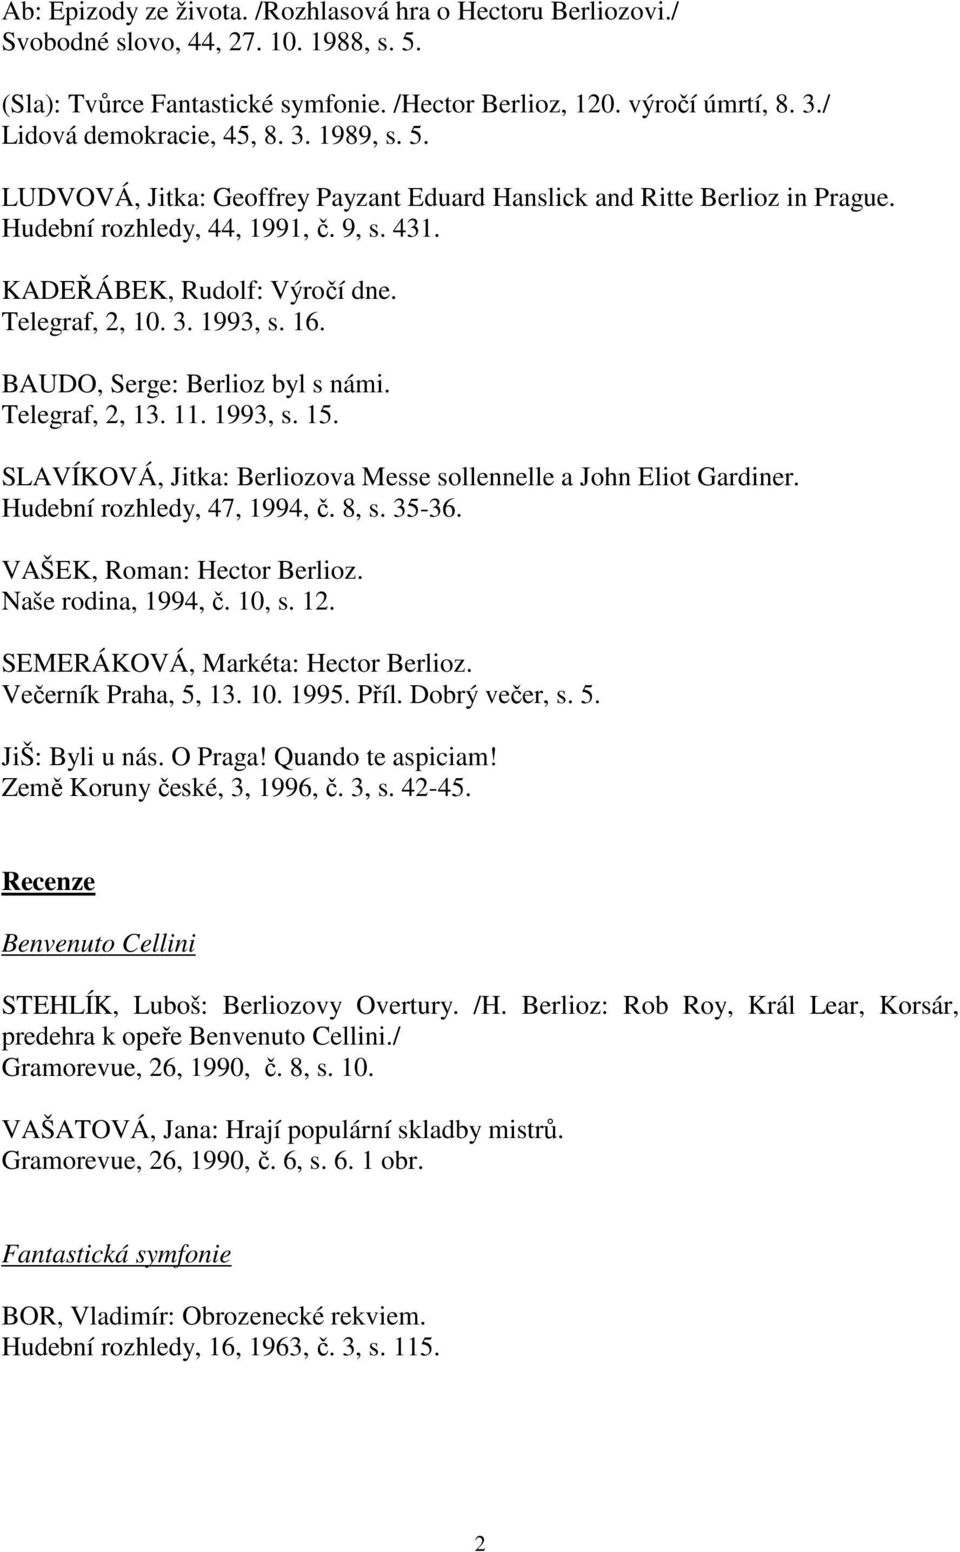 Telegraf, 2, 10. 3. 1993, s. 16. BAUDO, Serge: Berlioz byl s námi. Telegraf, 2, 13. 11. 1993, s. 15. SLAVÍKOVÁ, Jitka: Berliozova Messe sollennelle a John Eliot Gardiner.